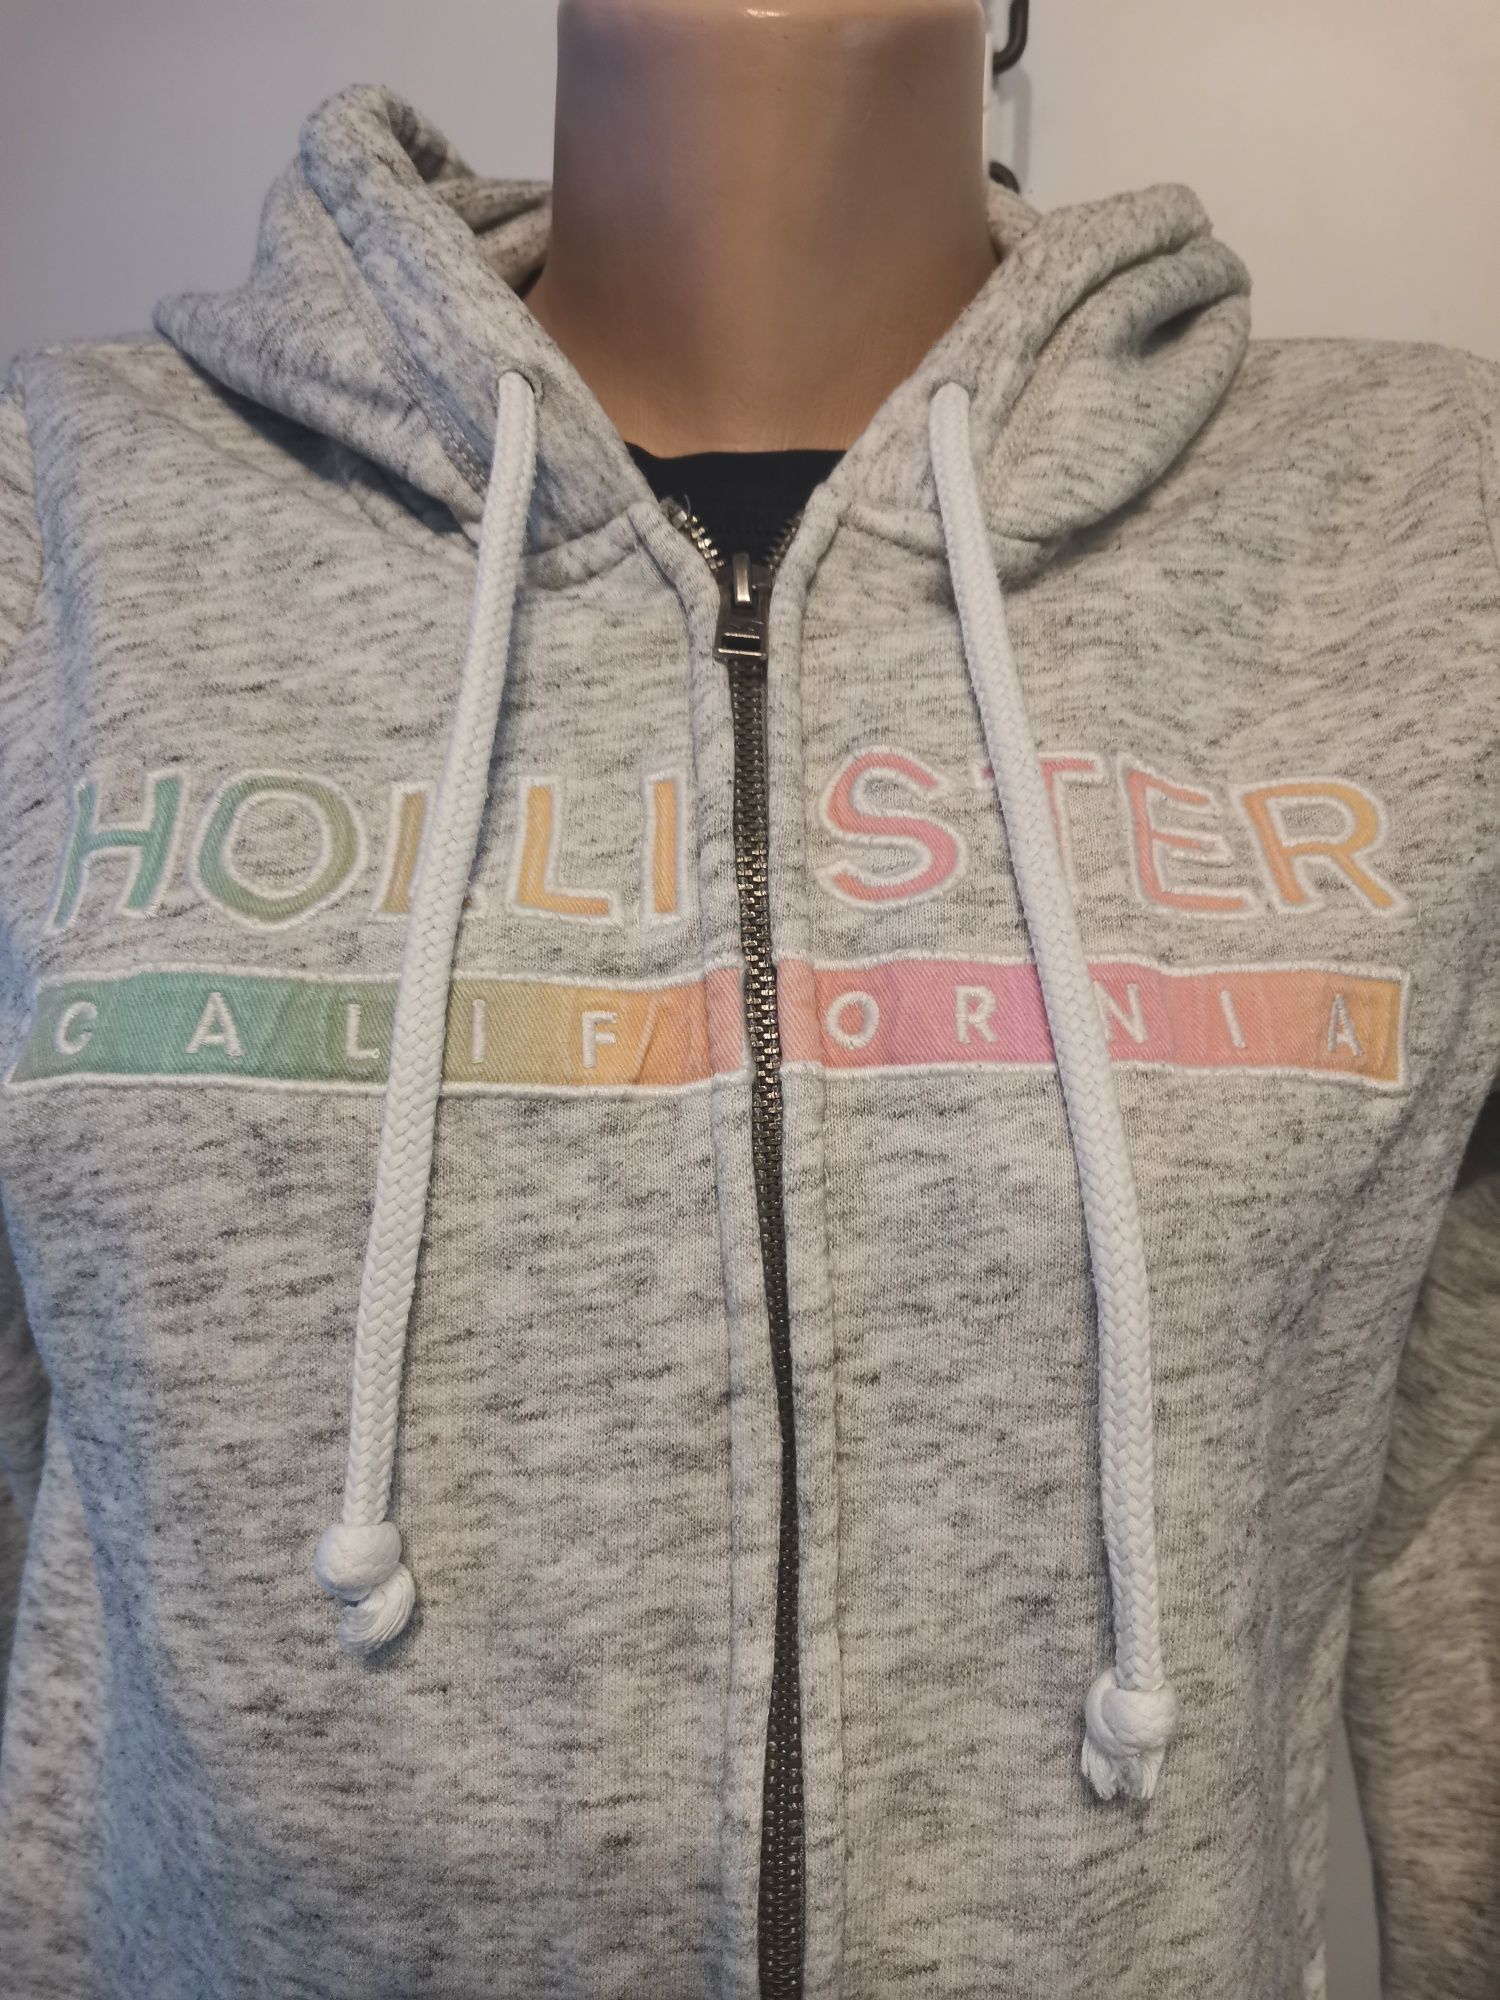 Szara bluza damska Hollister California rozm M, logo, kaptur